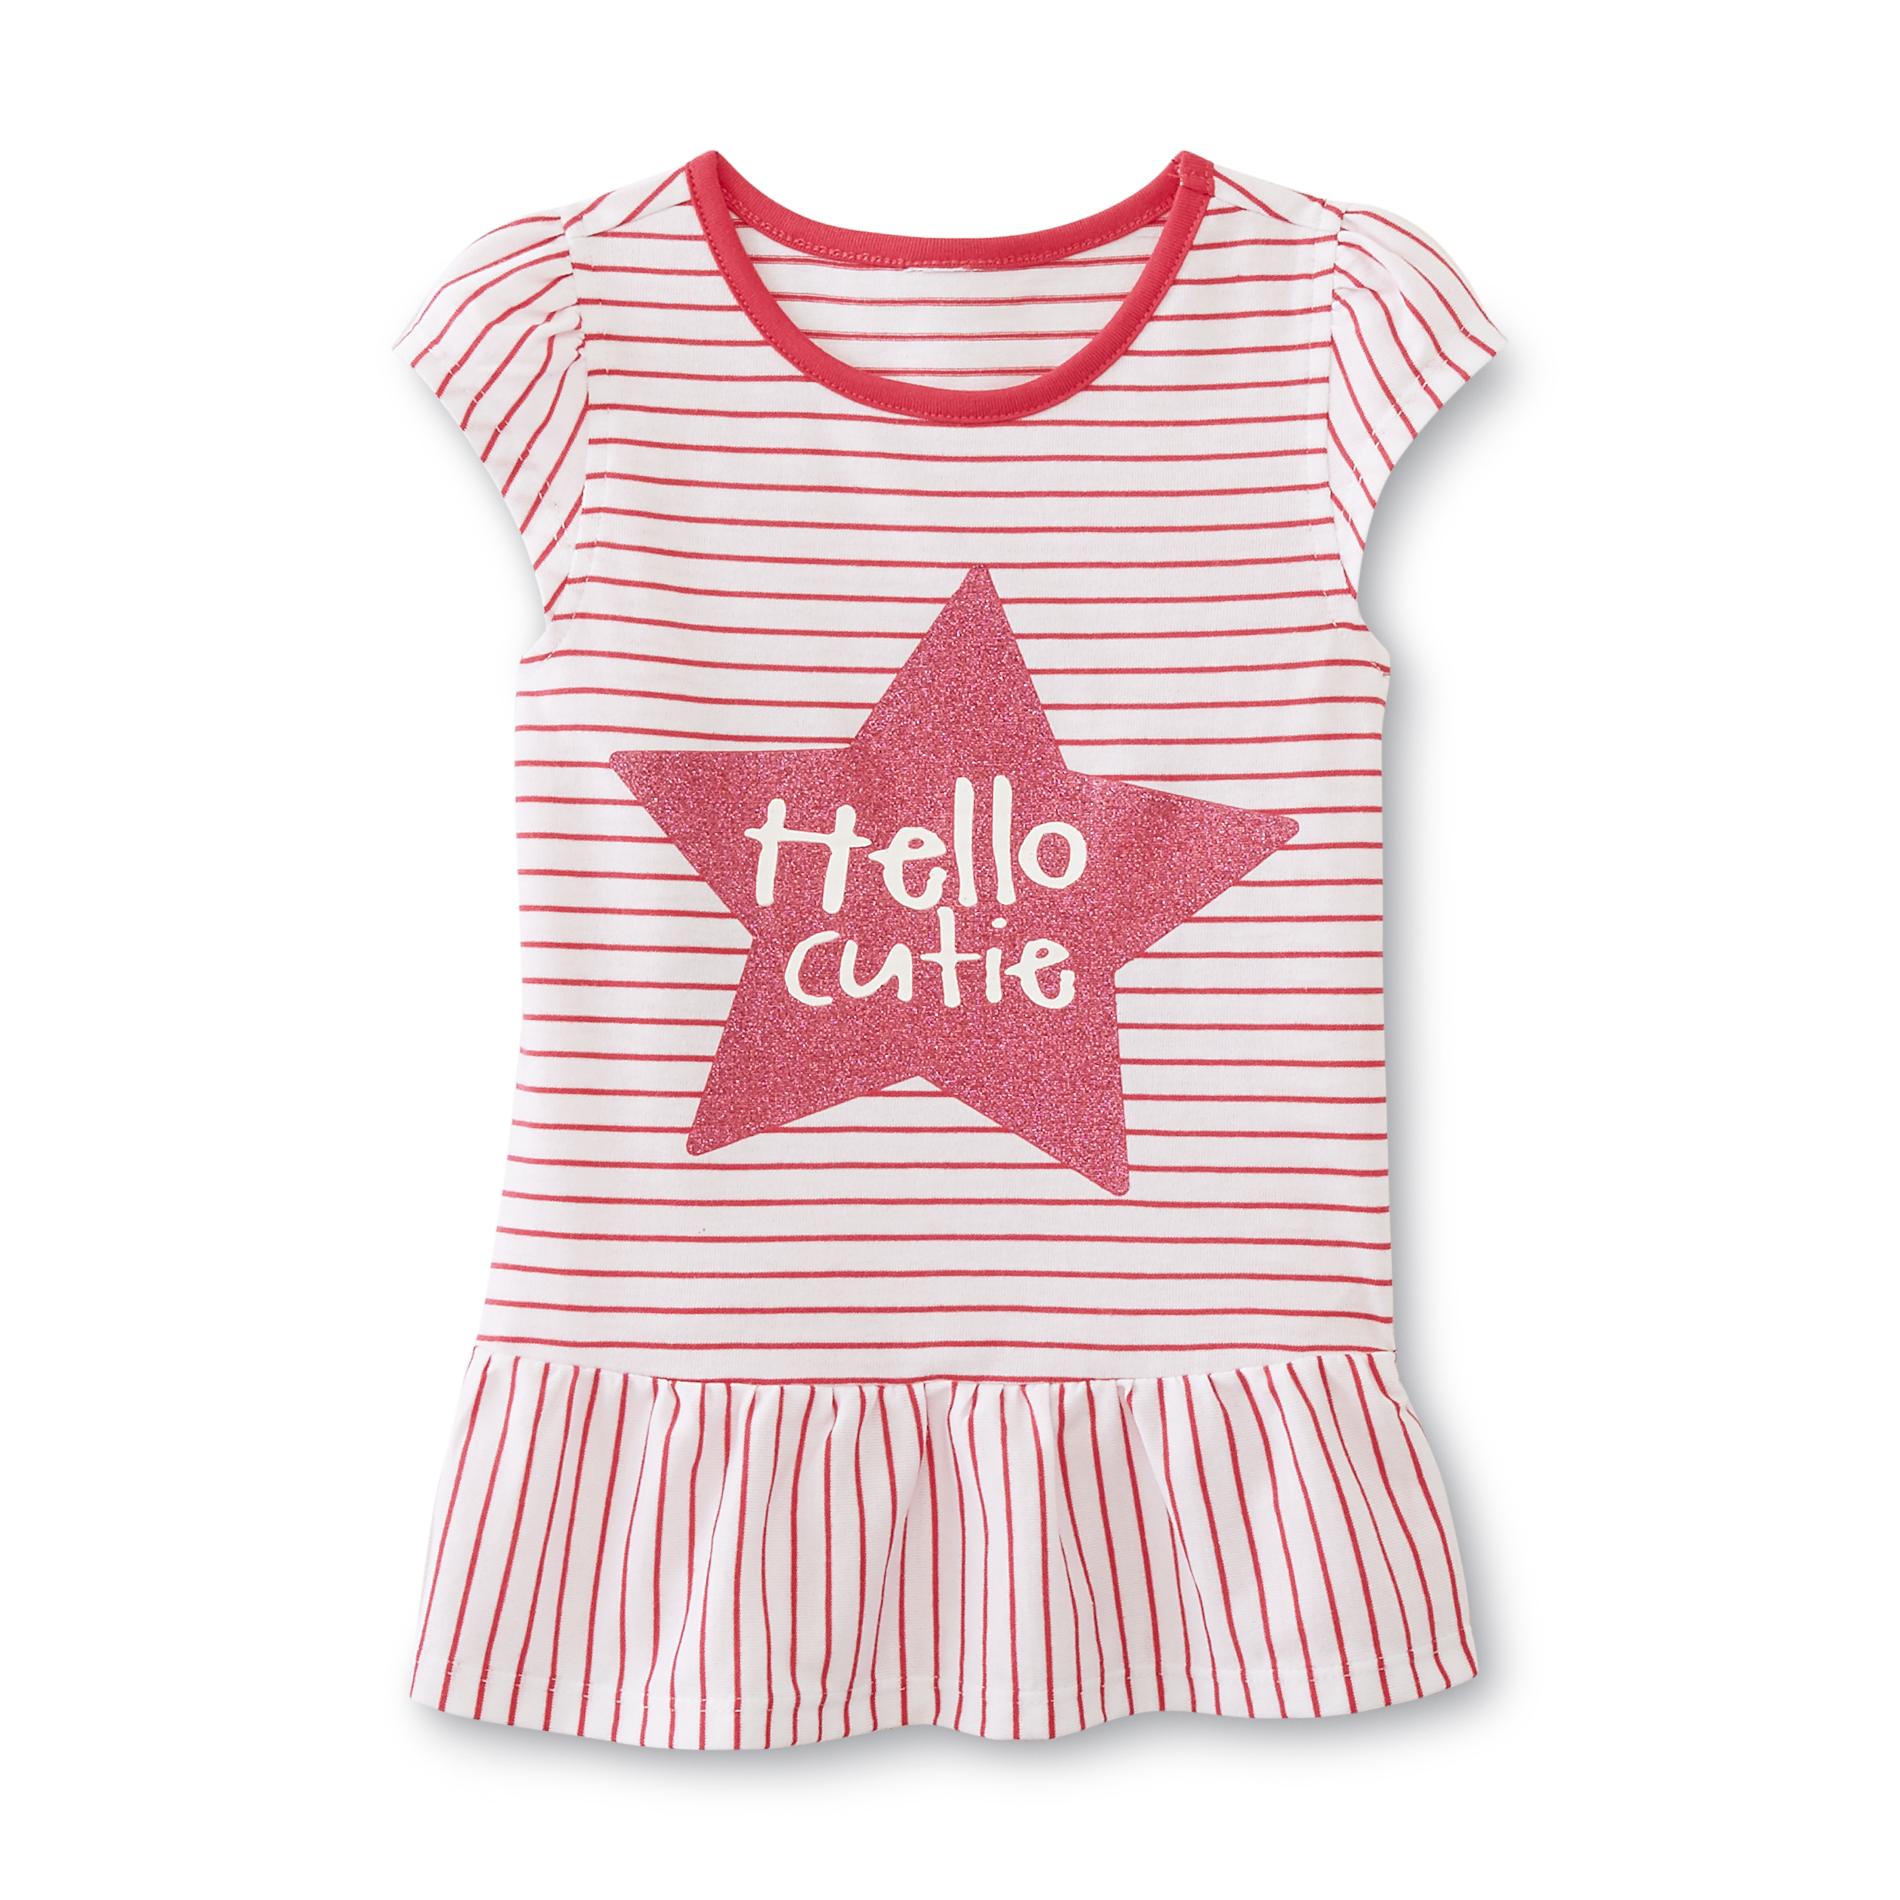 Infant & Toddler Girl's Graphic Peplum Top - Hello Cutie